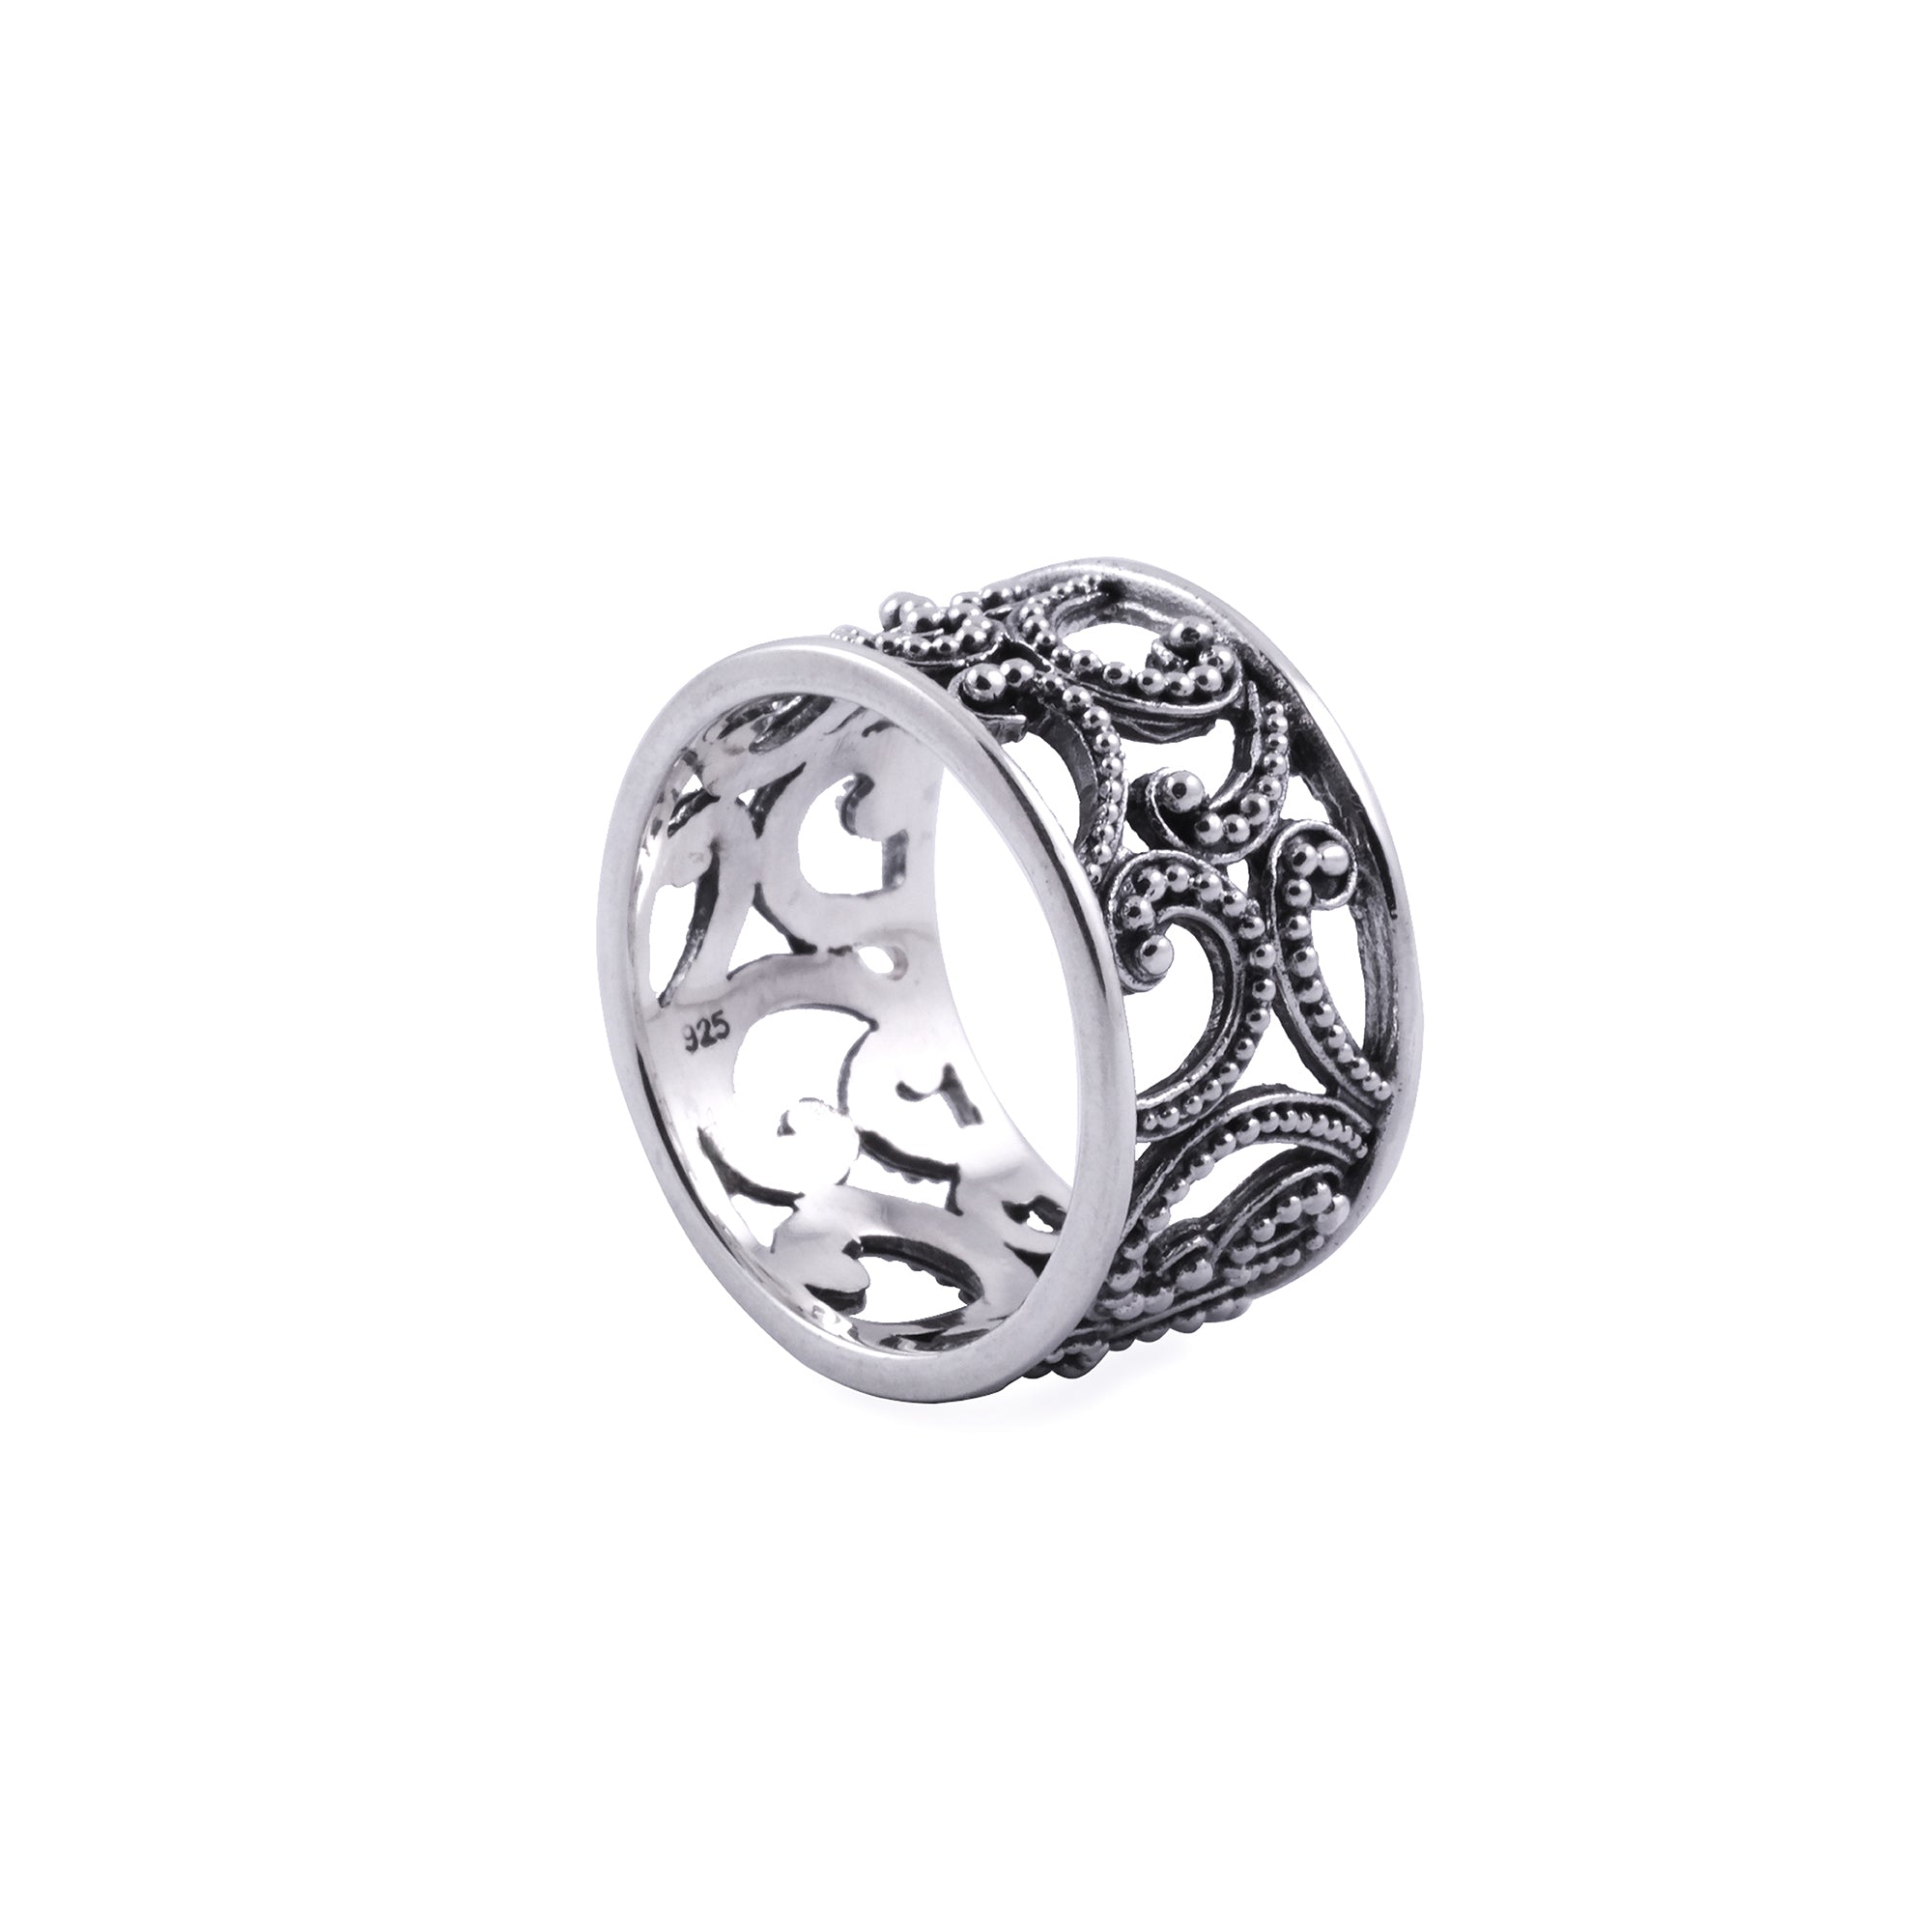 Ombak Segara Band Ring in Sterling Silver